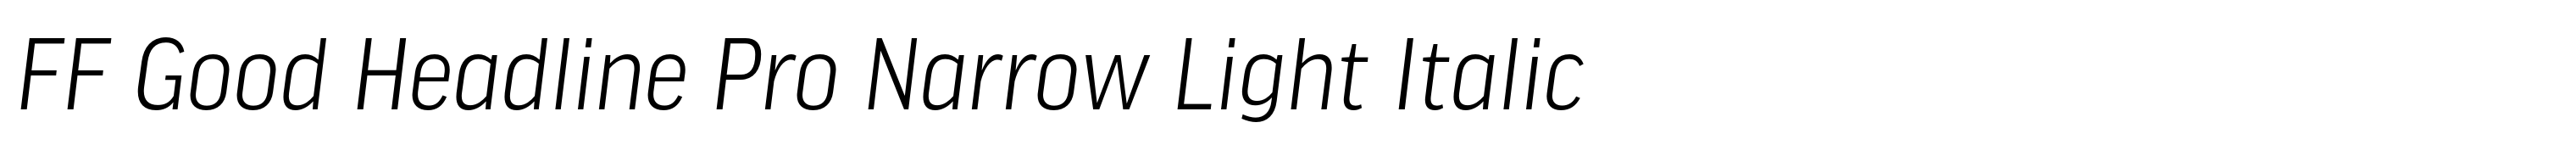 FF Good Headline Pro Narrow Light Italic